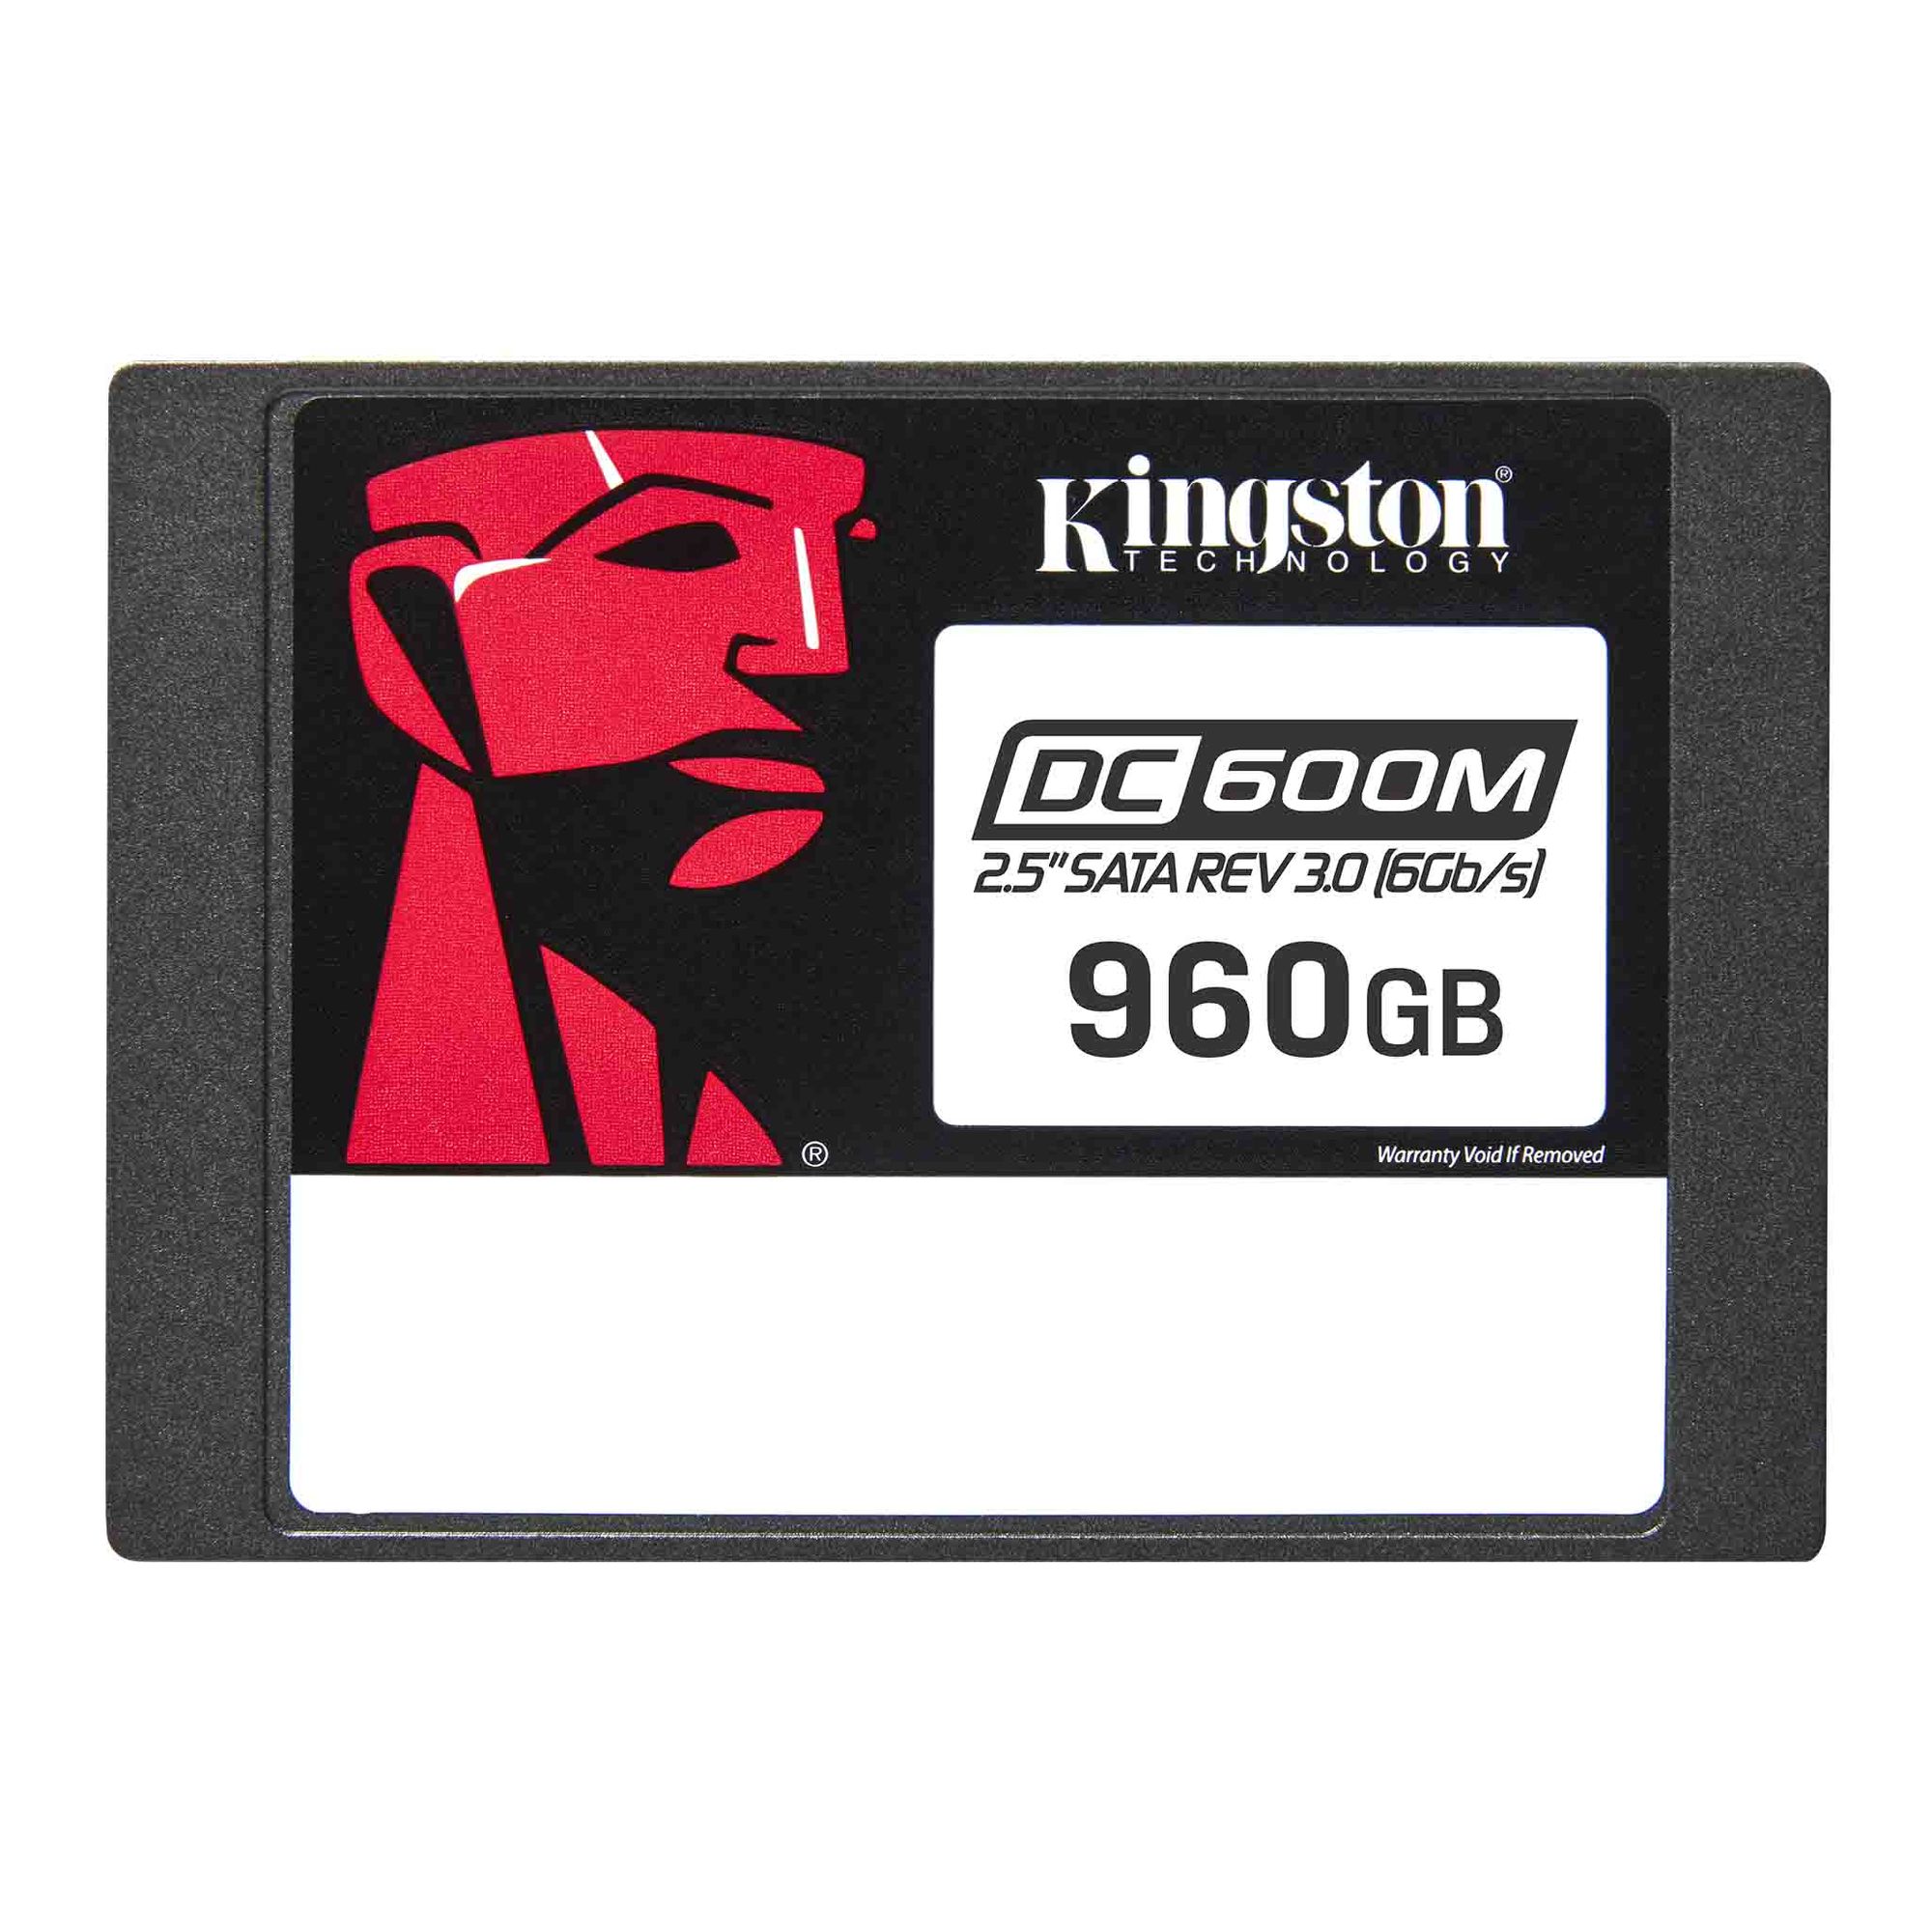 Накопитель SSD 2.5 Kingston Enterprise DC600M SATA 3 960GB (SEDC600M/960G) накопитель ssd kingston 1920gb 2 5 sata 3 sedc600m 1920g